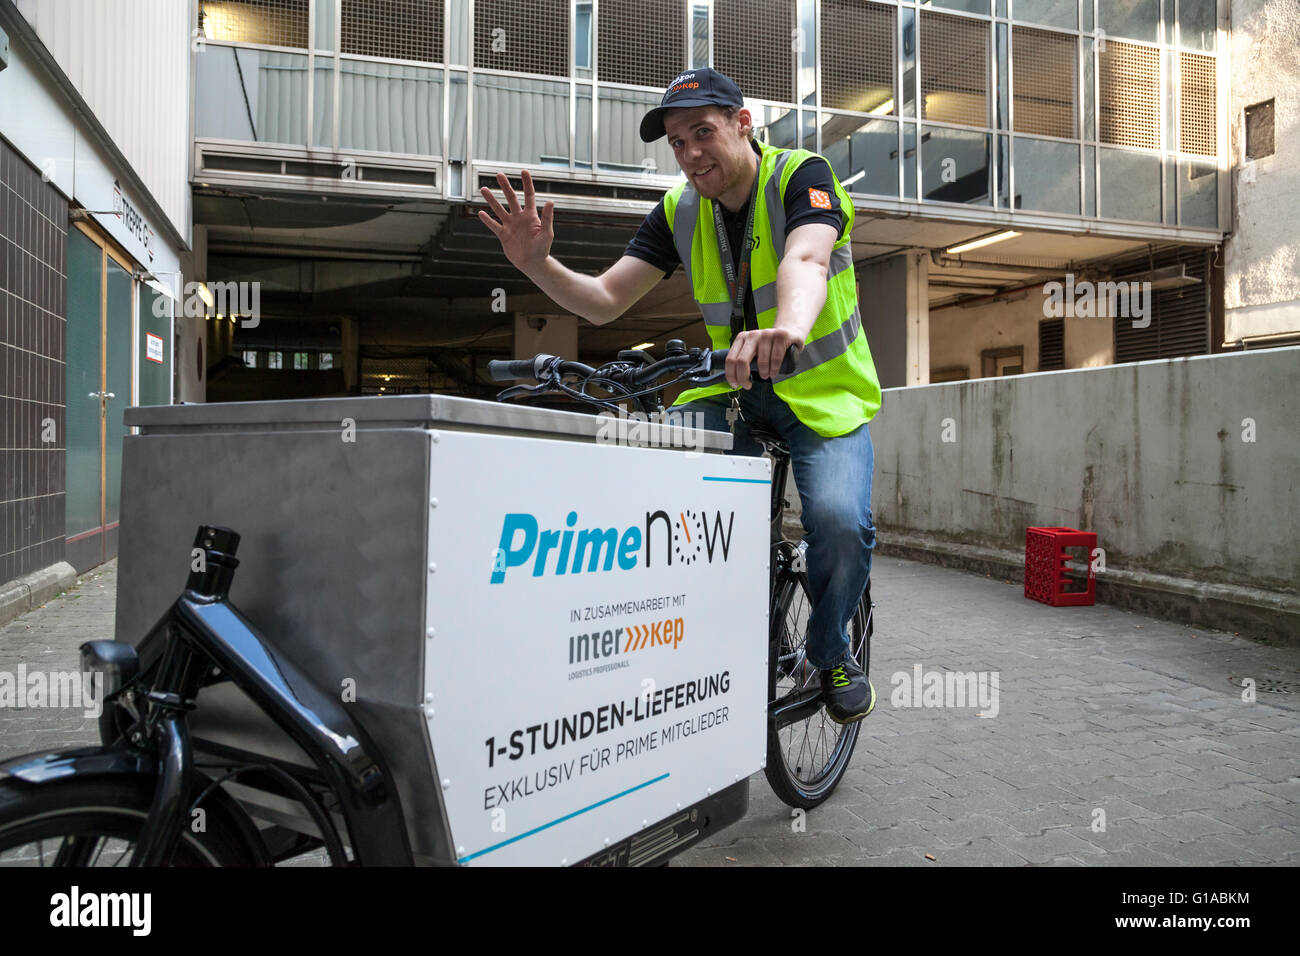 amazon delivery bike